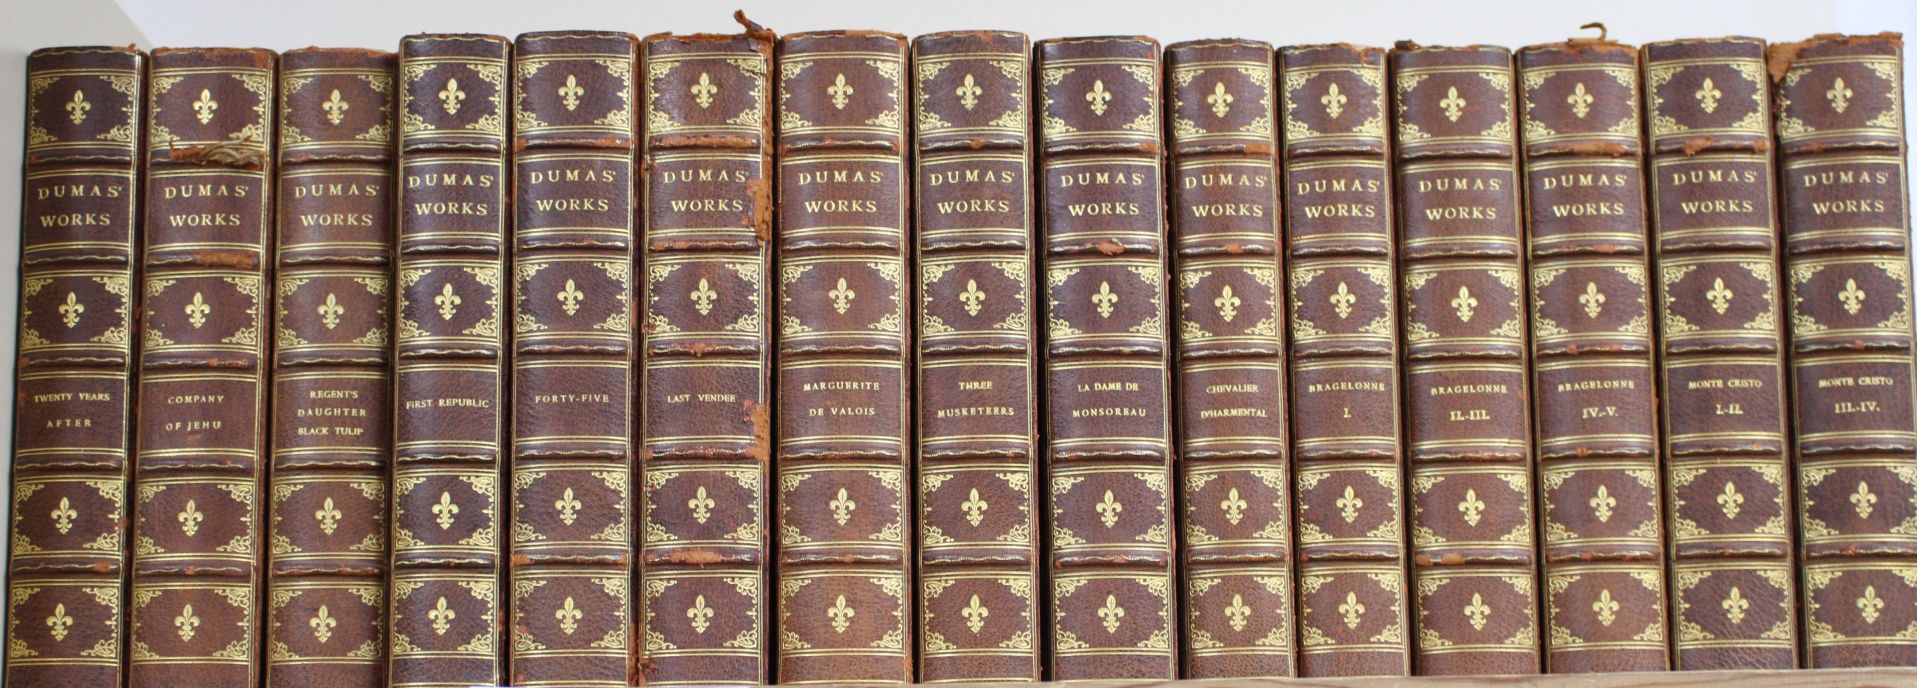 Dumas, Alexandre - Works, John Wanamaker of Paris, c.1900, half calf, 15 vols Condition: Varying